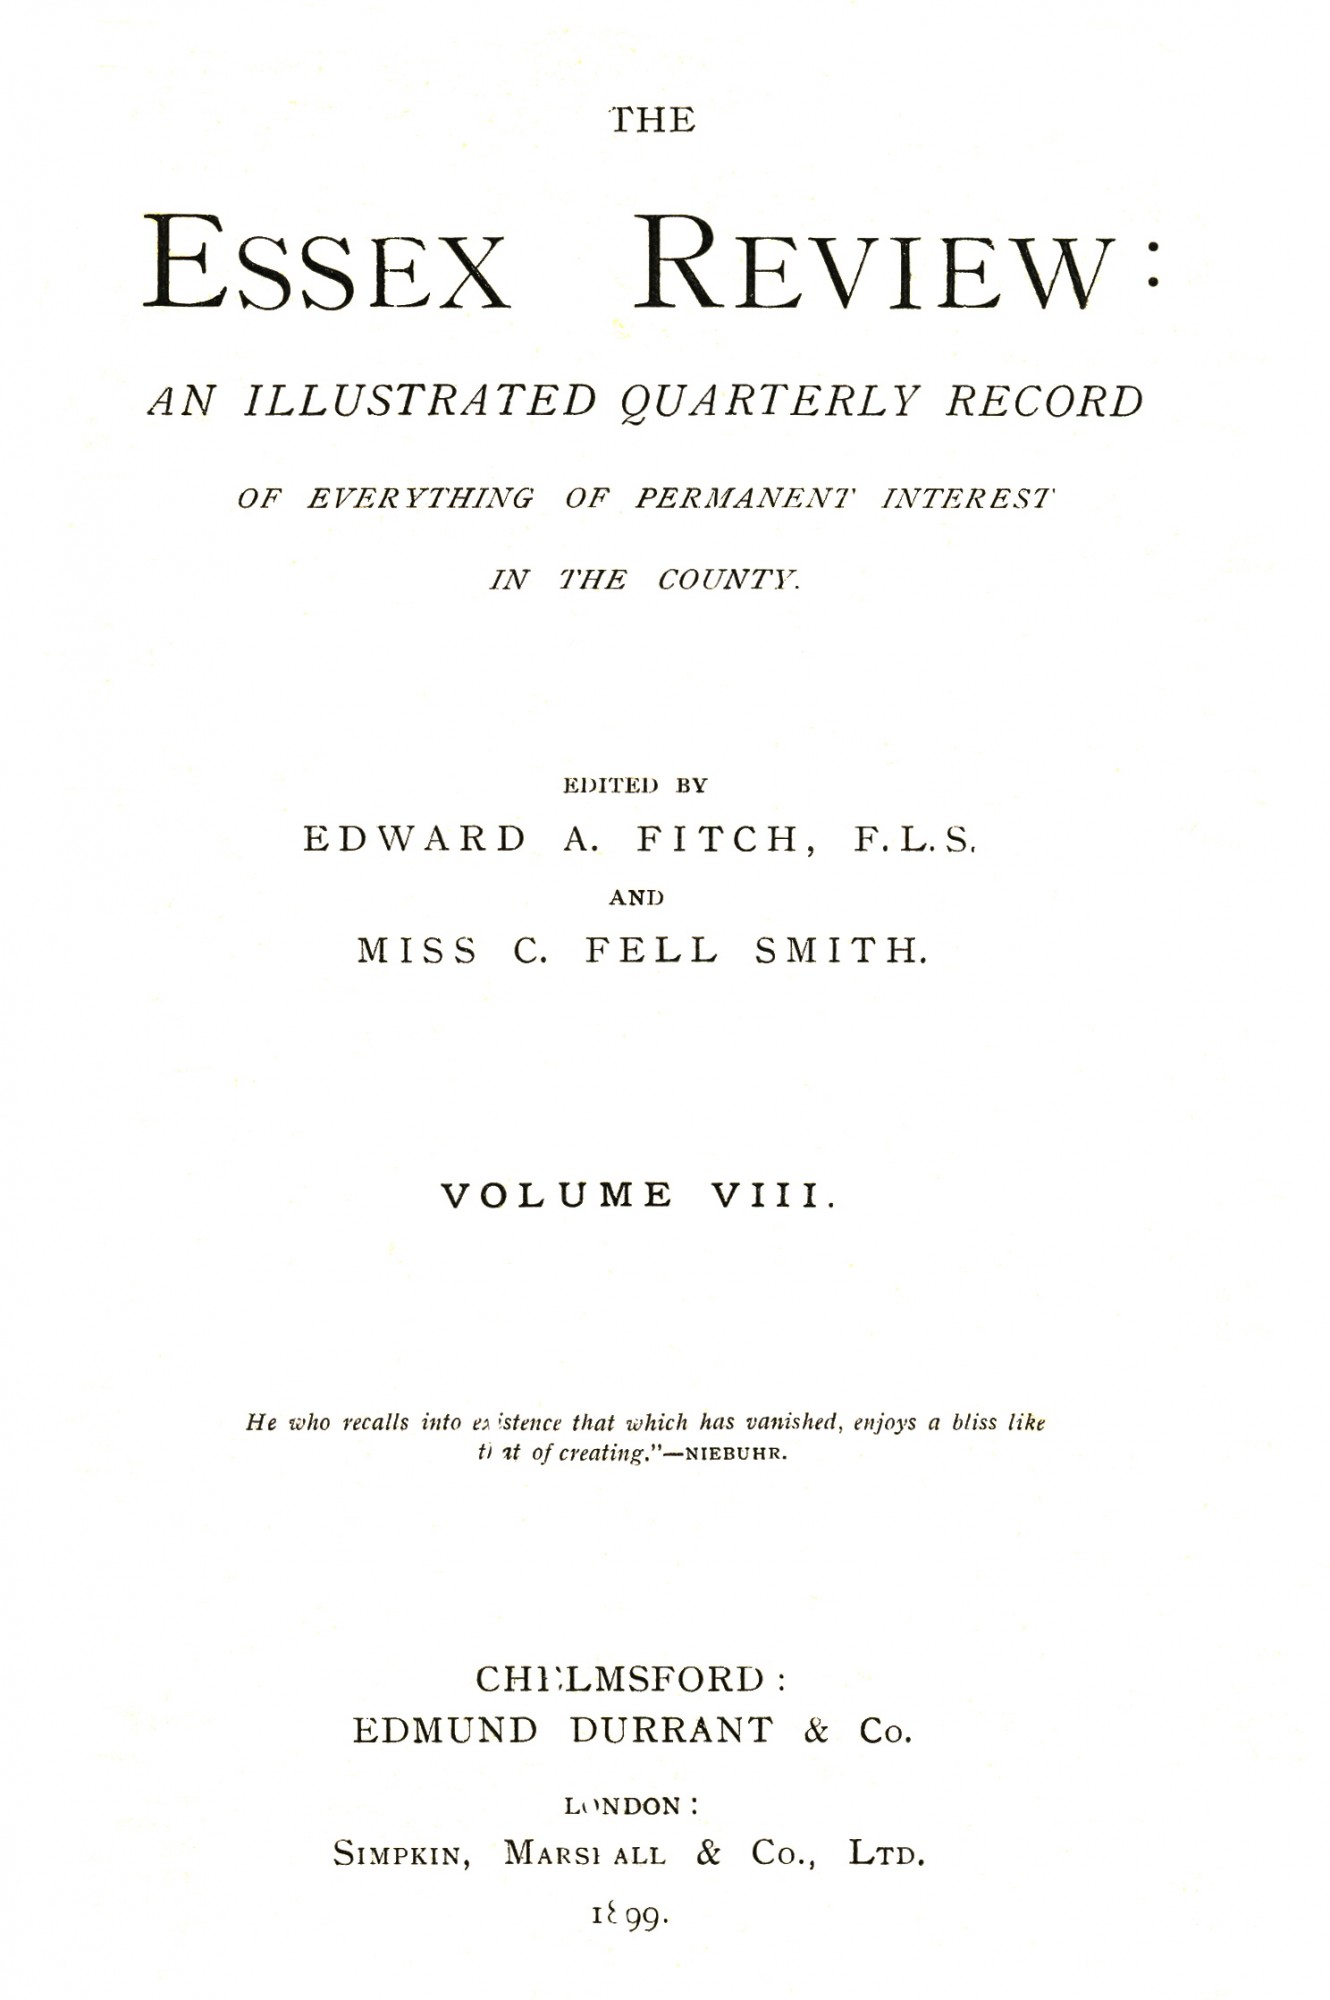 Volume 8 (1899) publications illustration 1